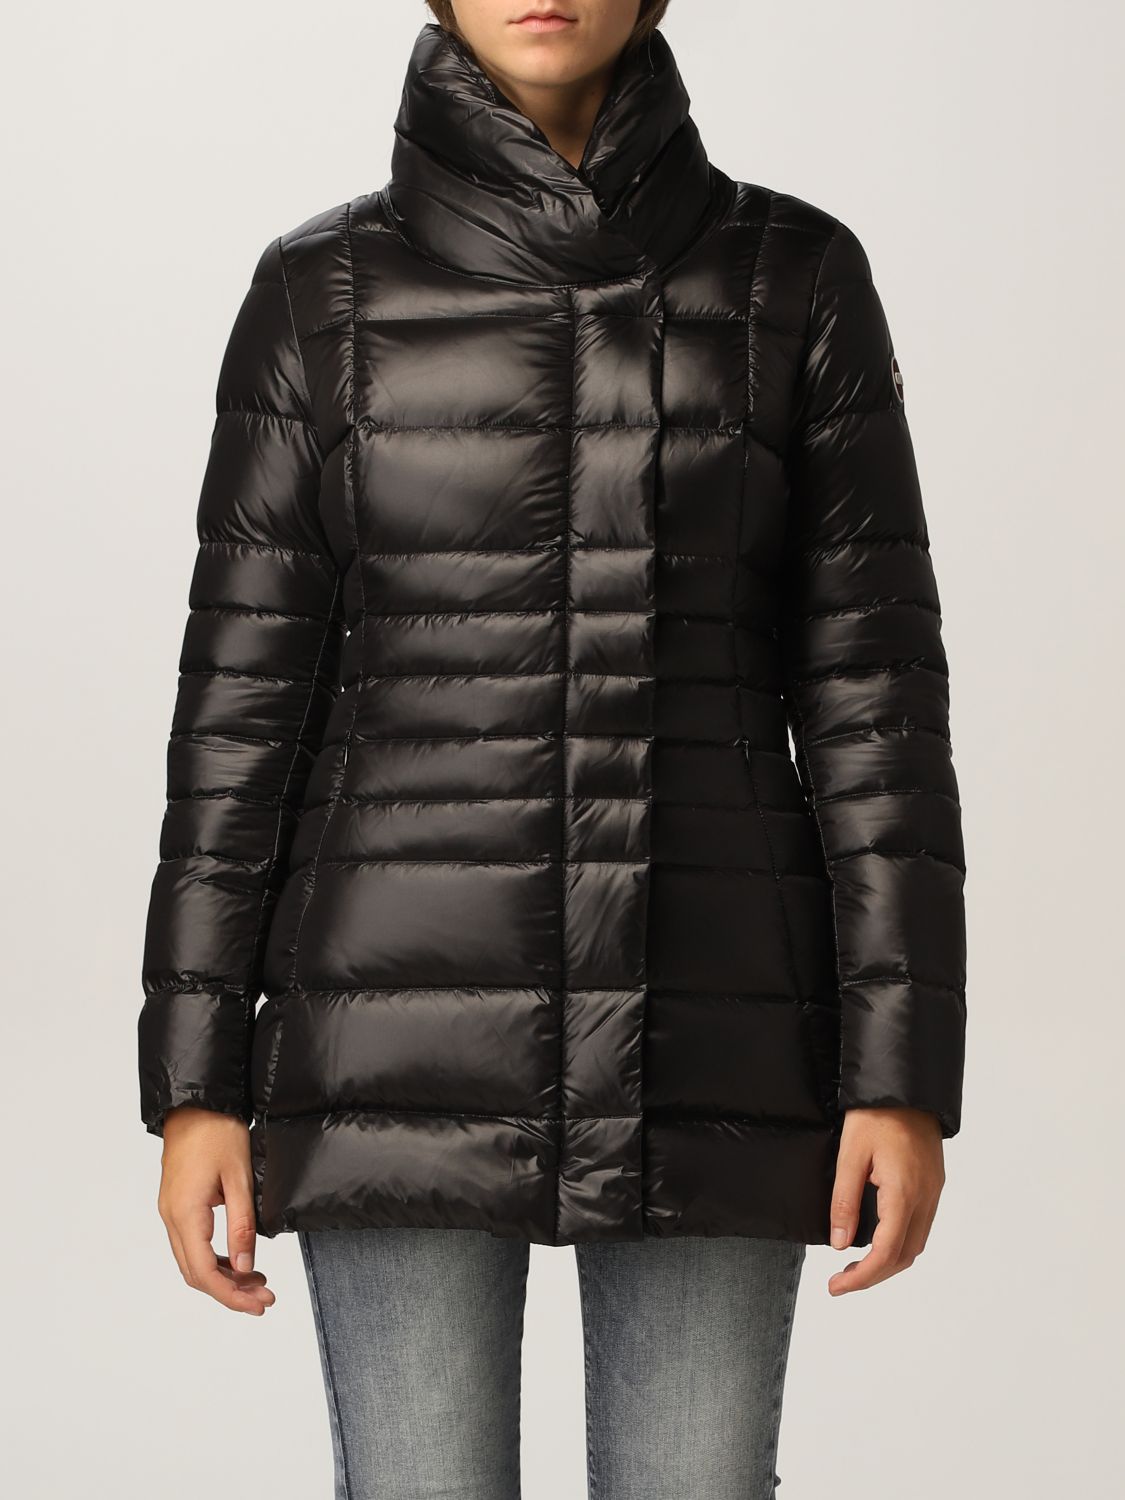 COLMAR: jacket for women - Black | Colmar jacket 2271 5WG online on ...